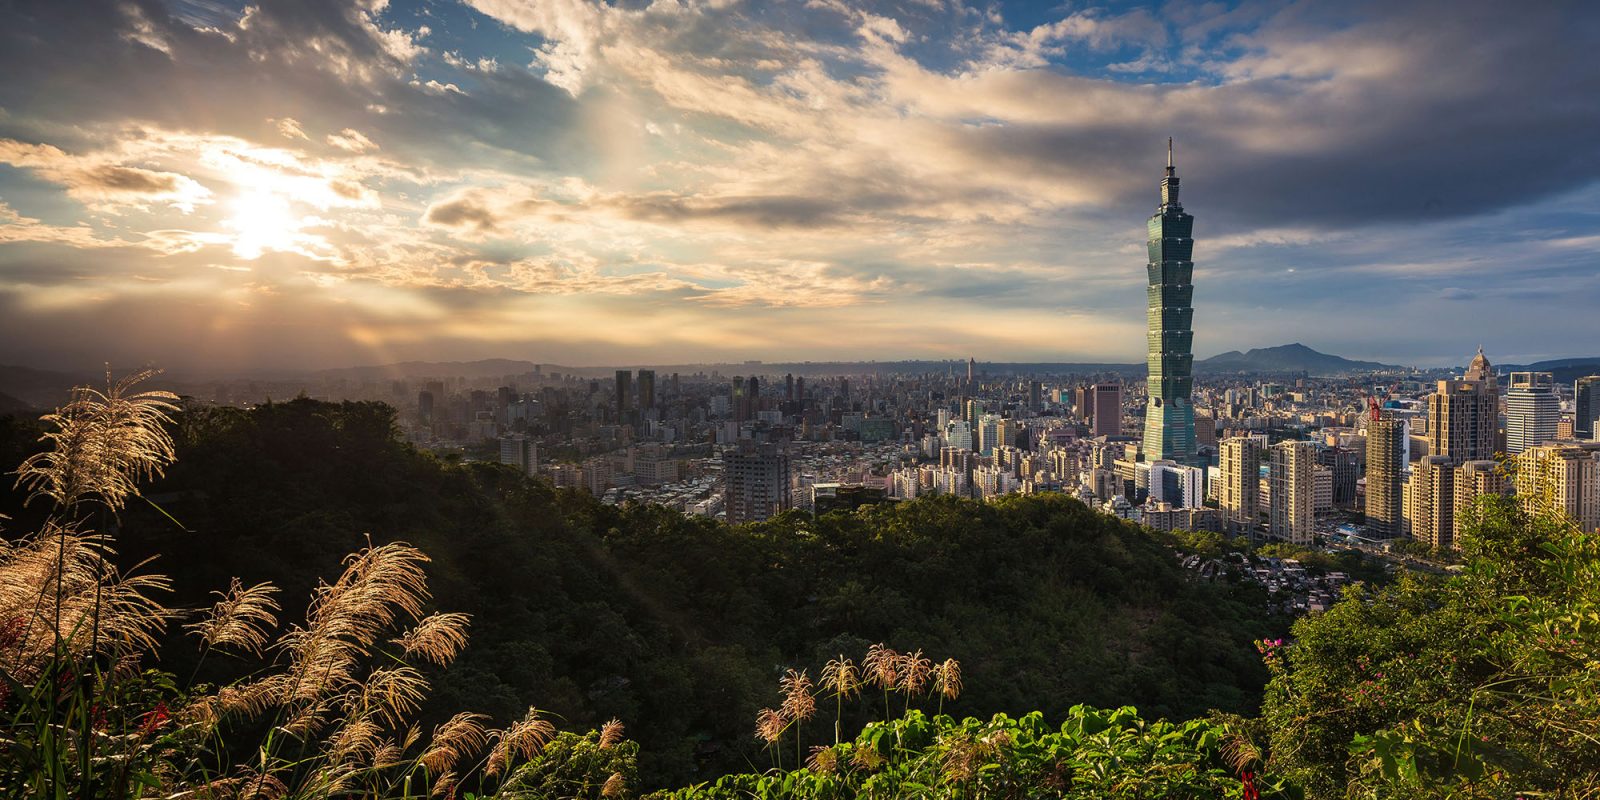 Jeff Williams in Taiwan | Taipei skyline pictured